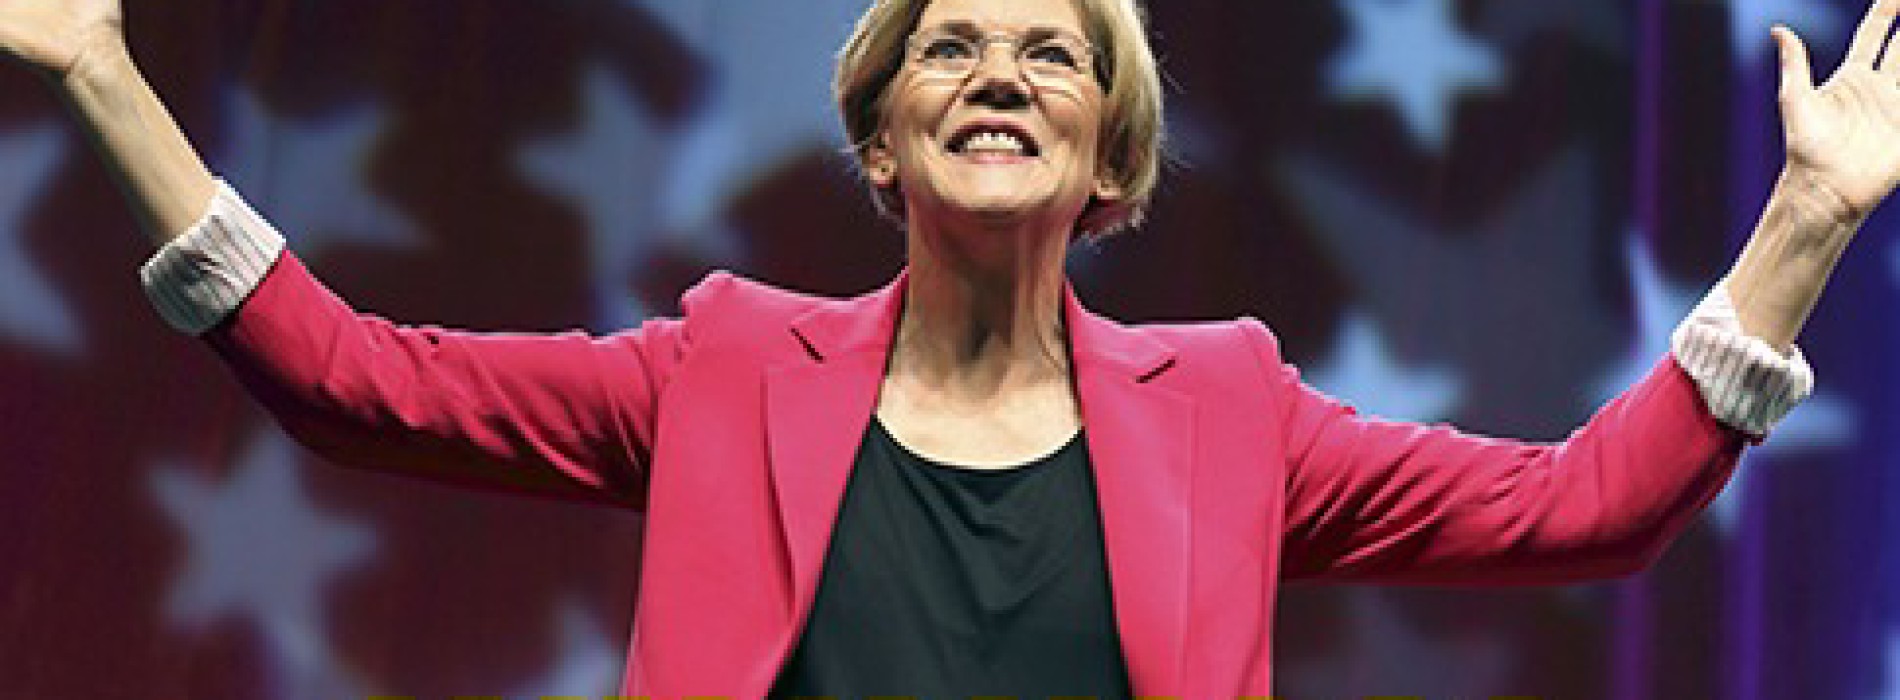 Elizabeth Warren Was the Winner in Last Week’s Democrat Presidential Debate